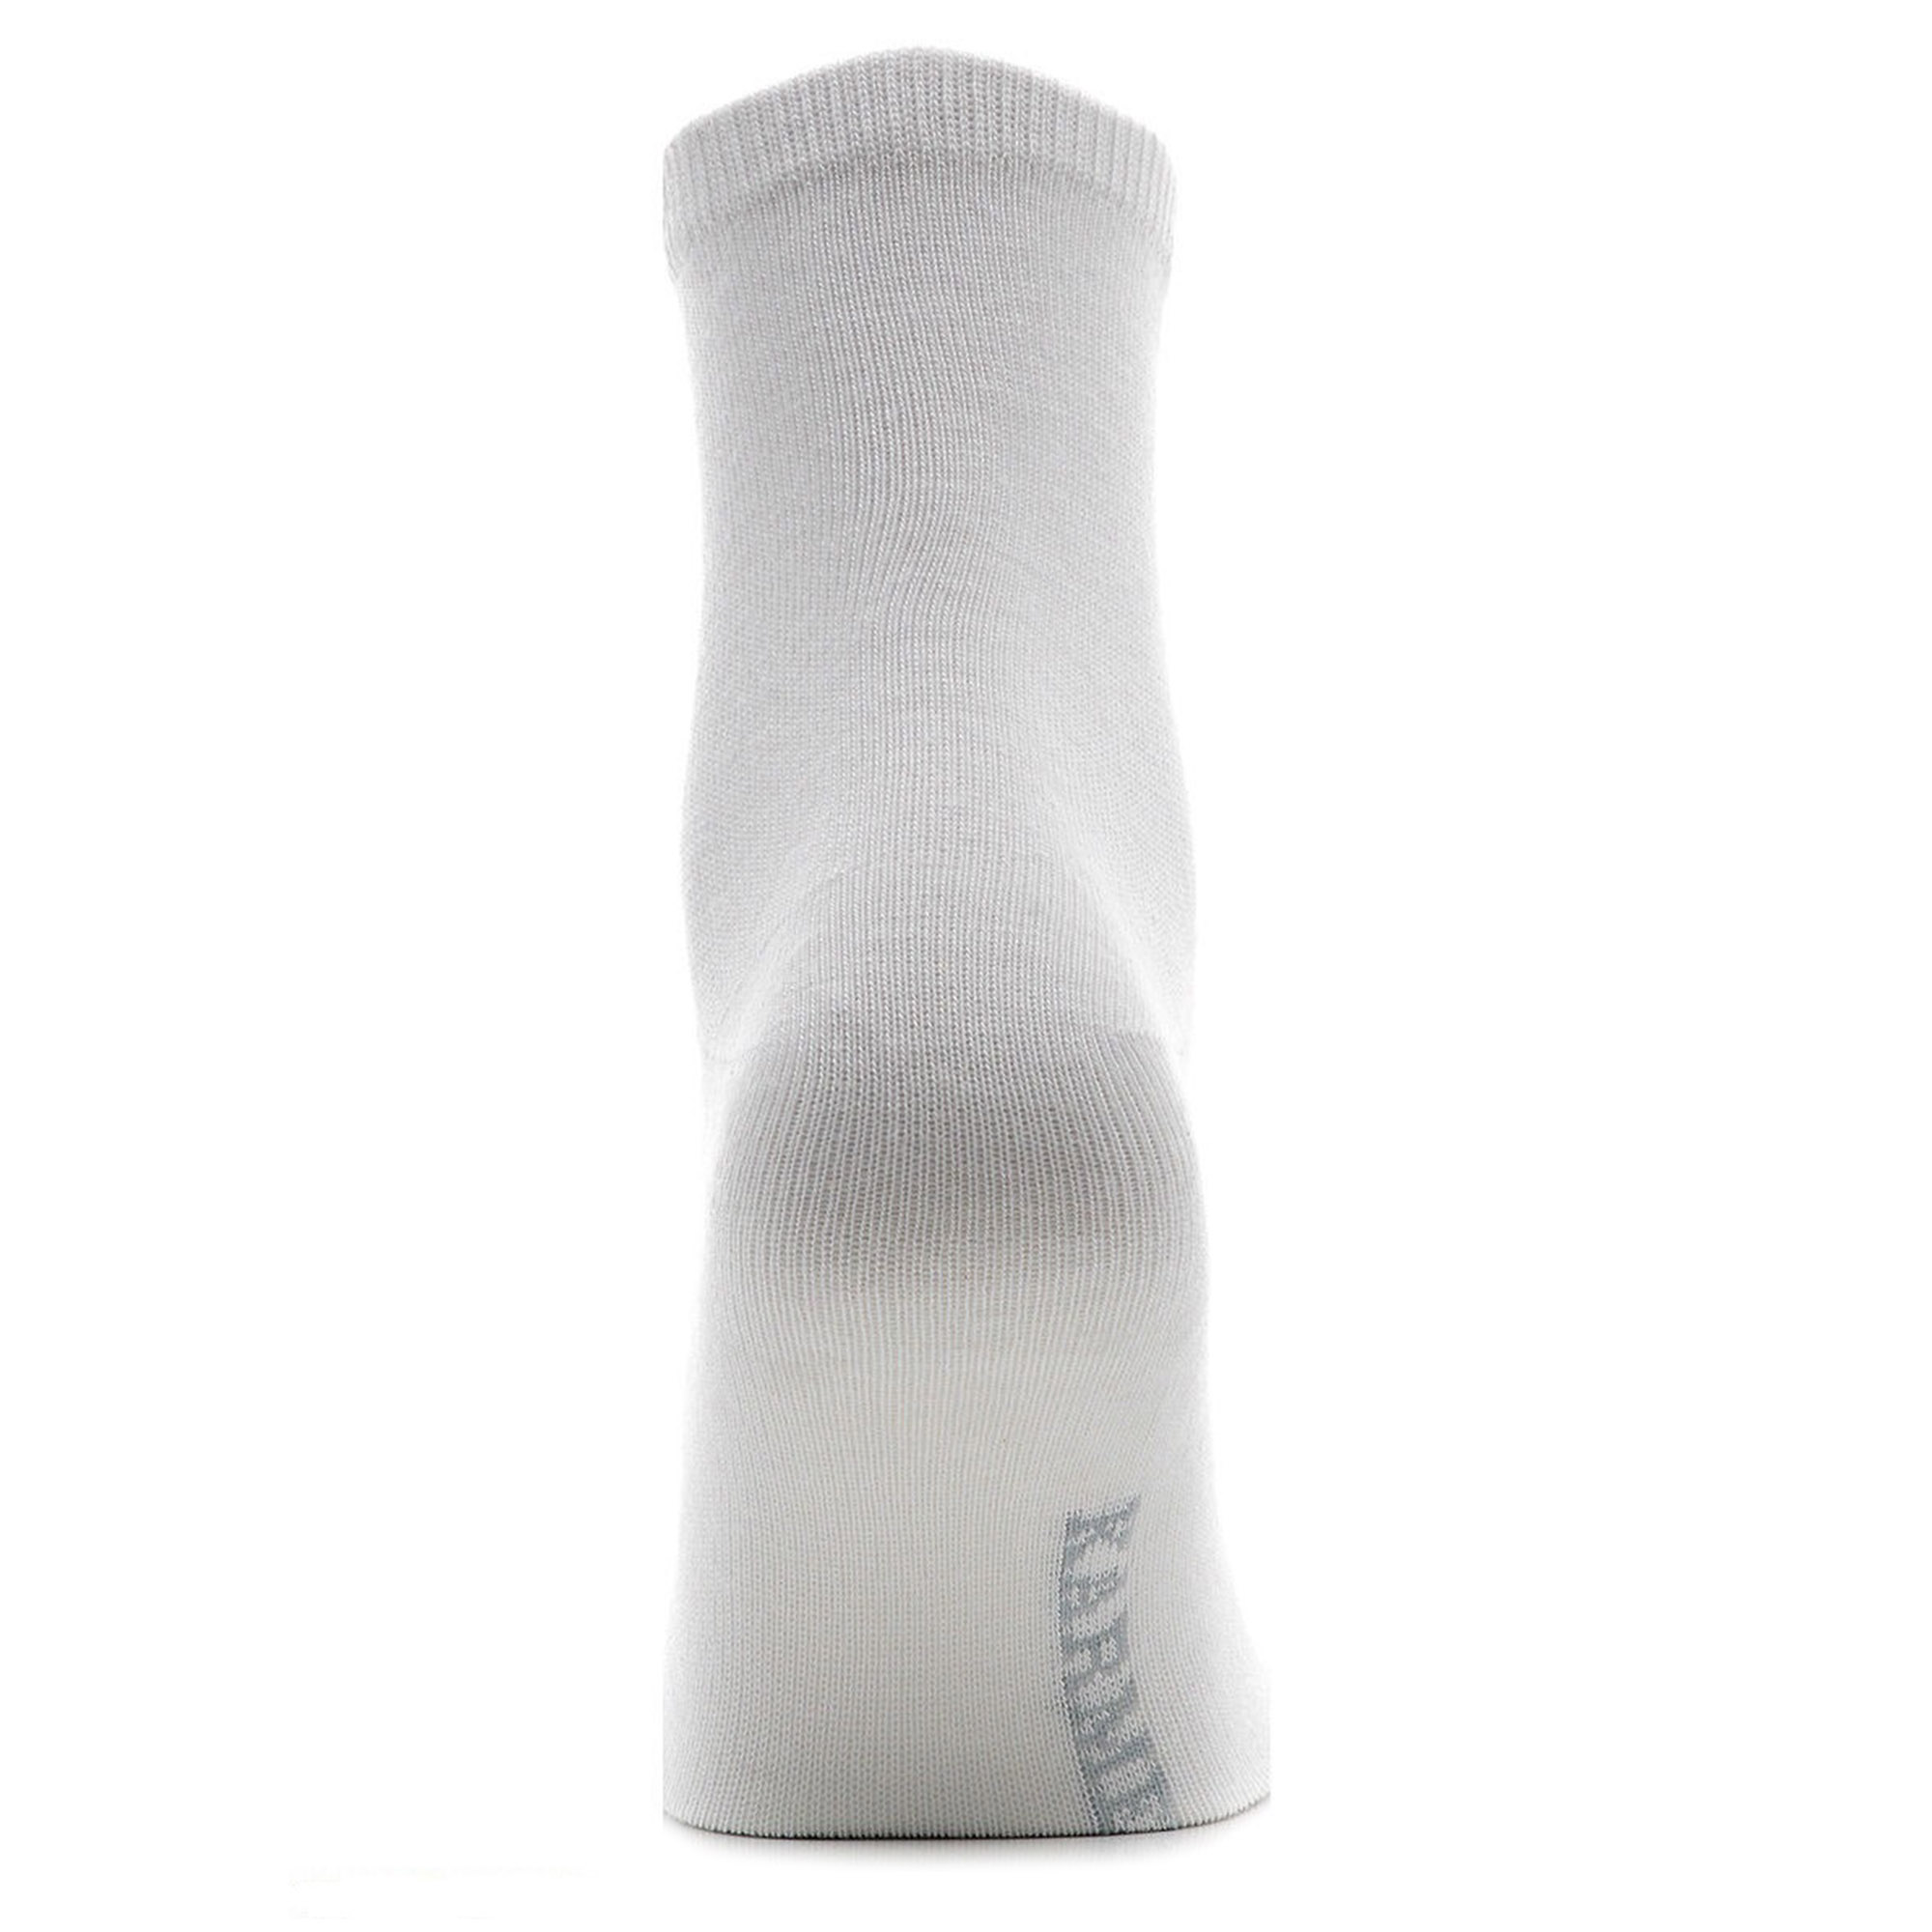 Носки Karmen Calza Look bianco M 38-40, цвет белый, размер 38-40 - фото 2